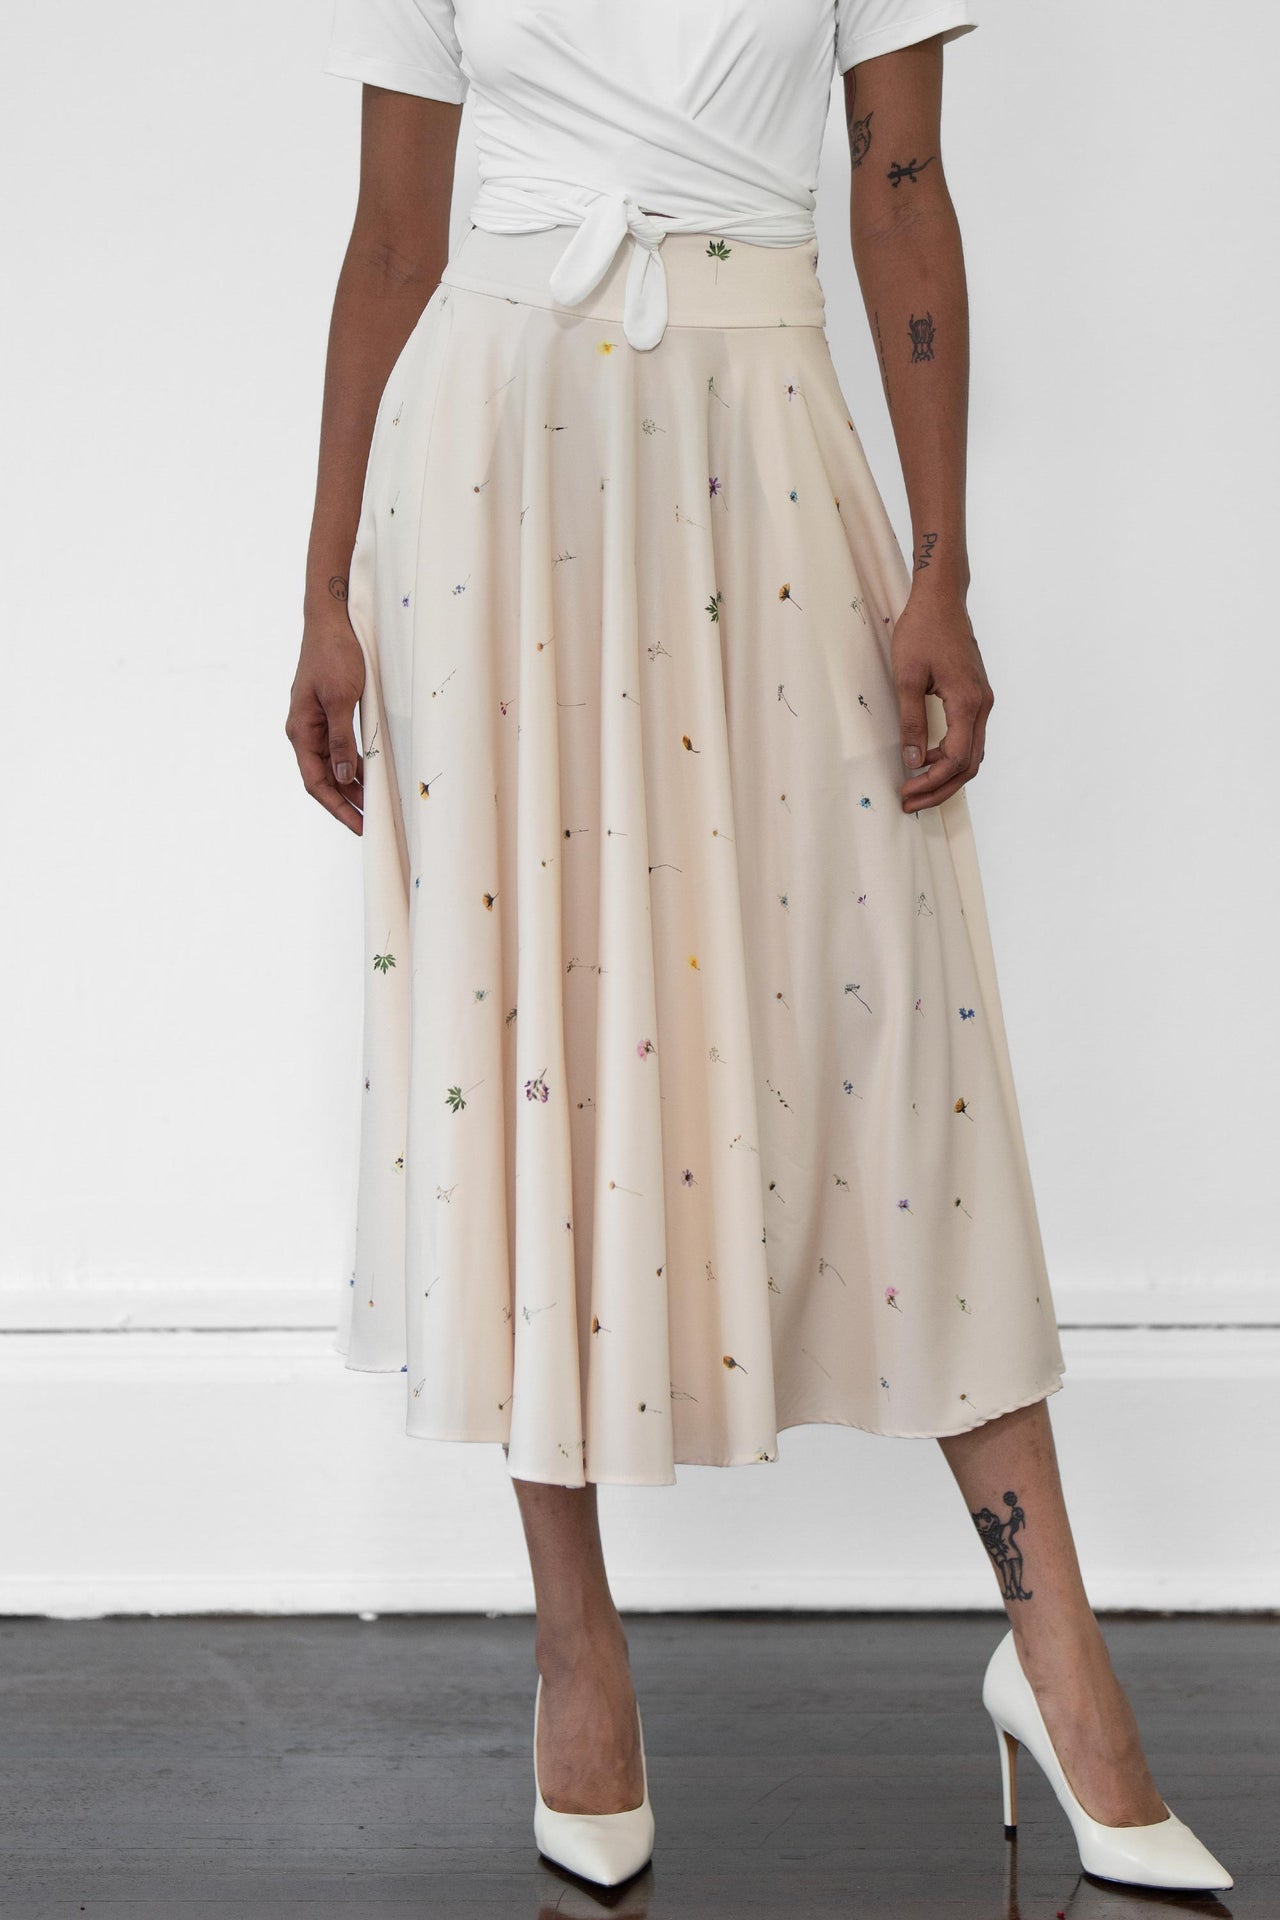 Full Circle Skirt (Pressed Flowers)